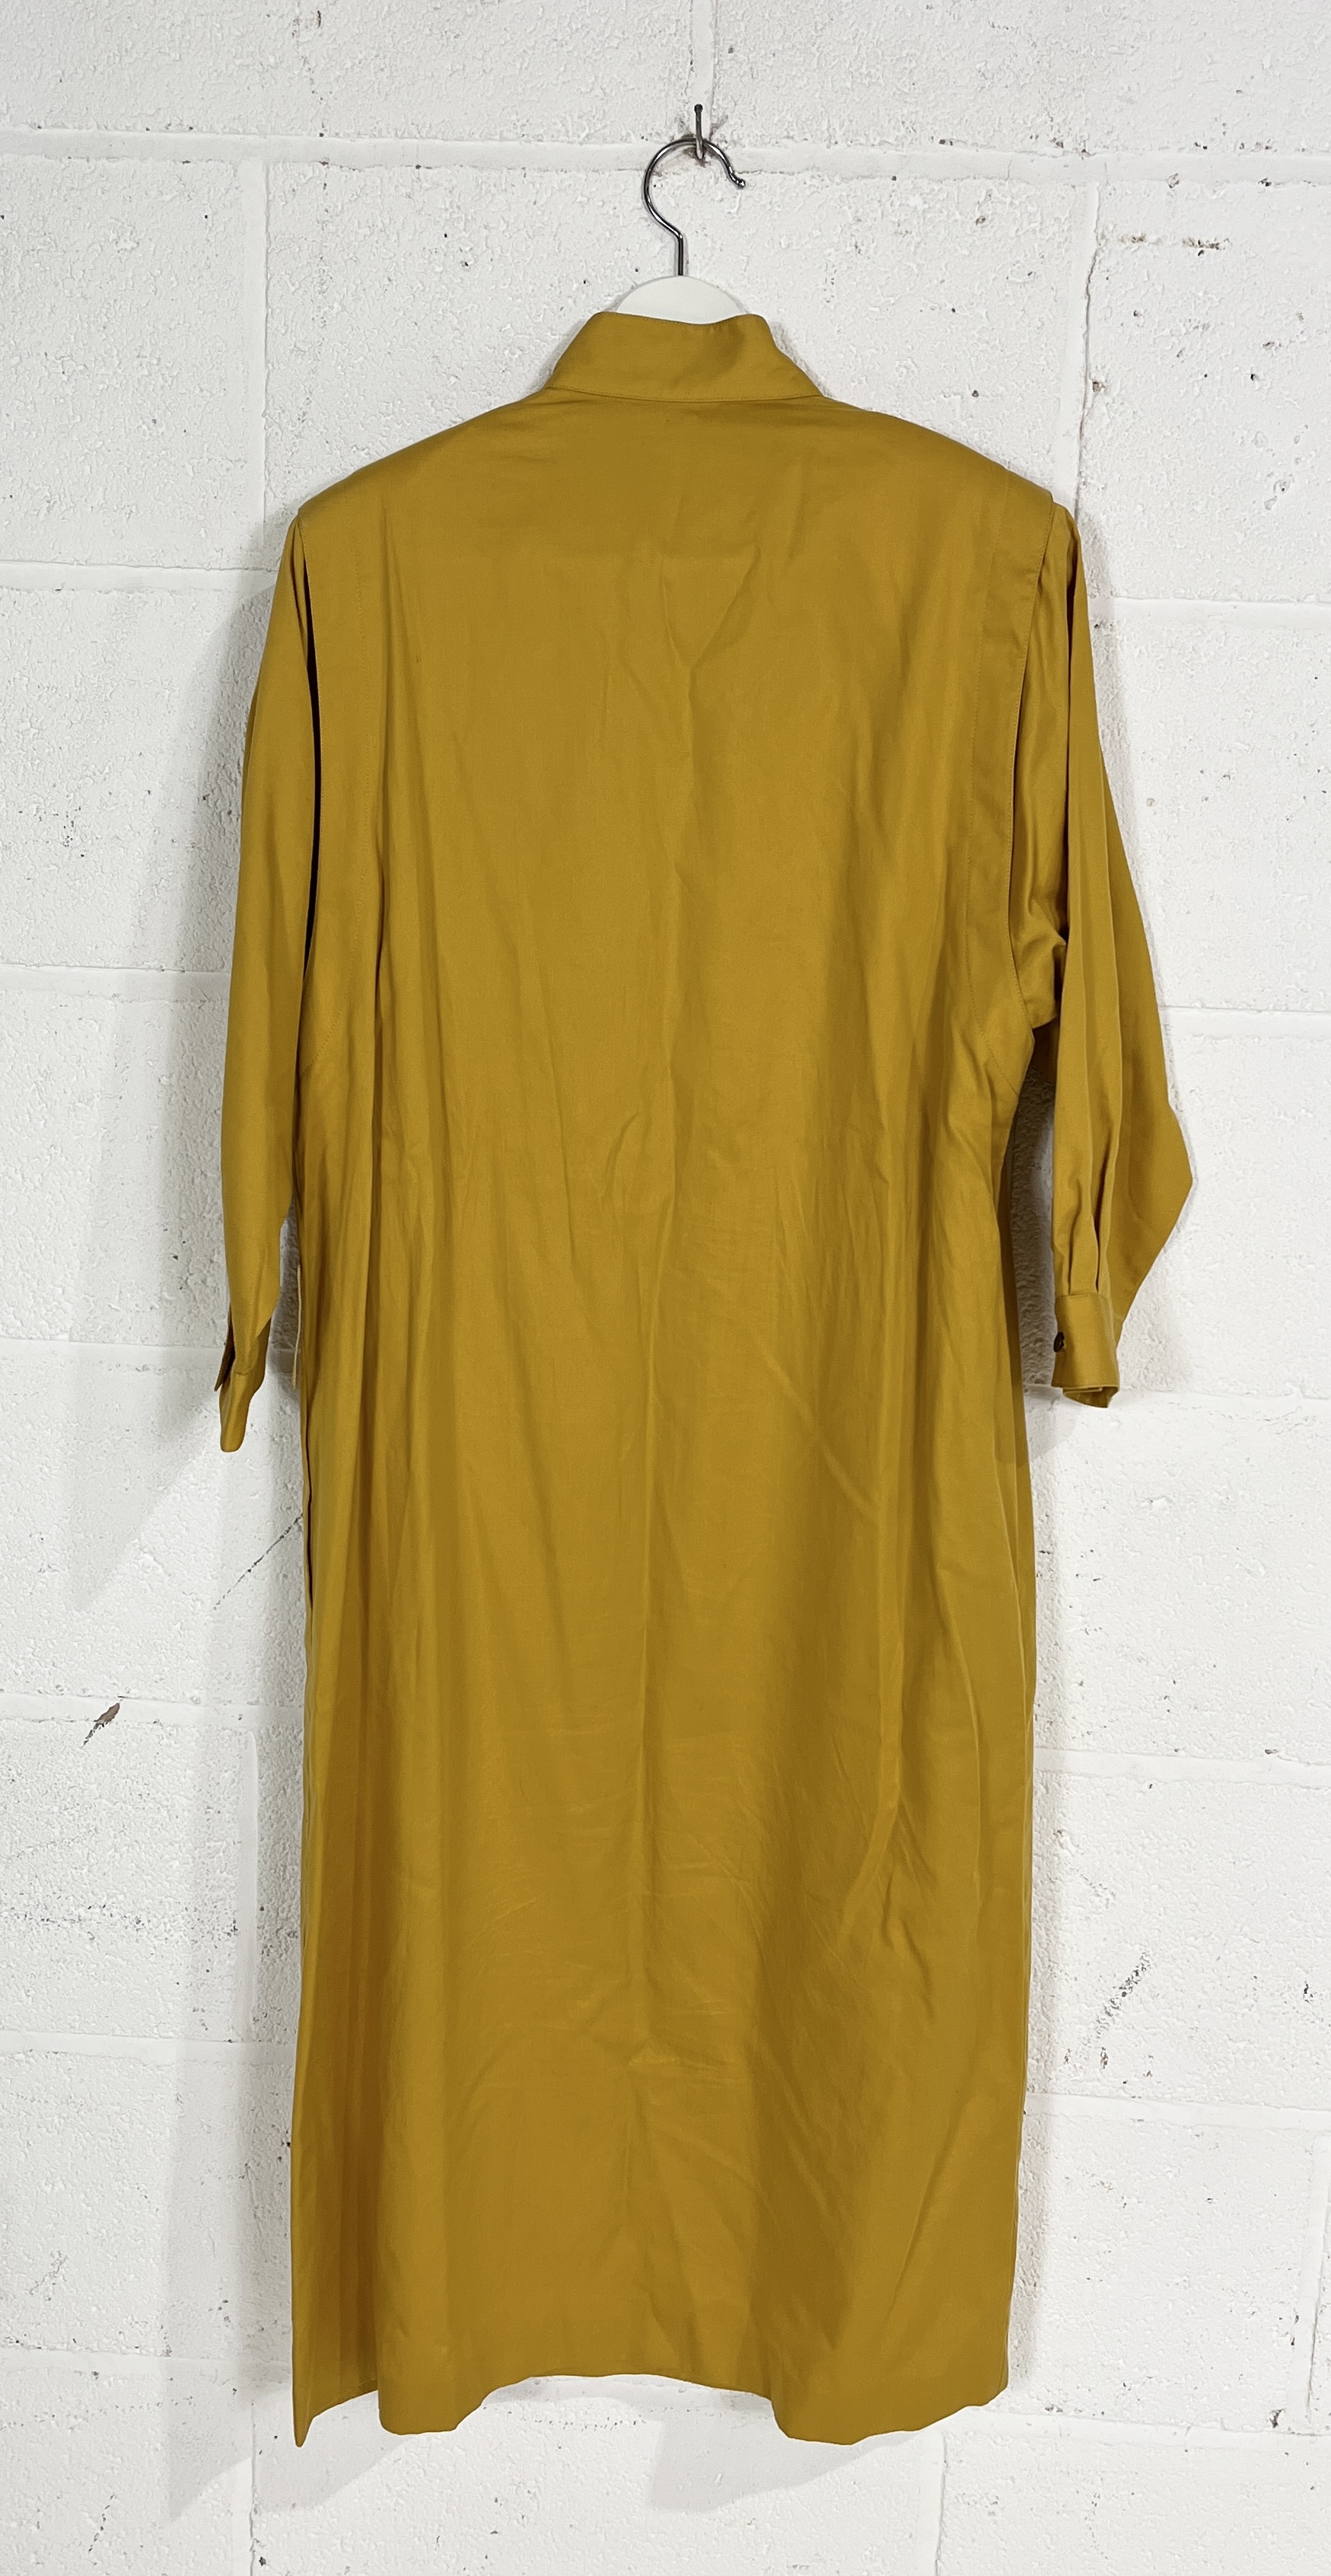 A vintage Louis Feraud yellow Kaftan dress and belt UK size 12 - Image 3 of 5